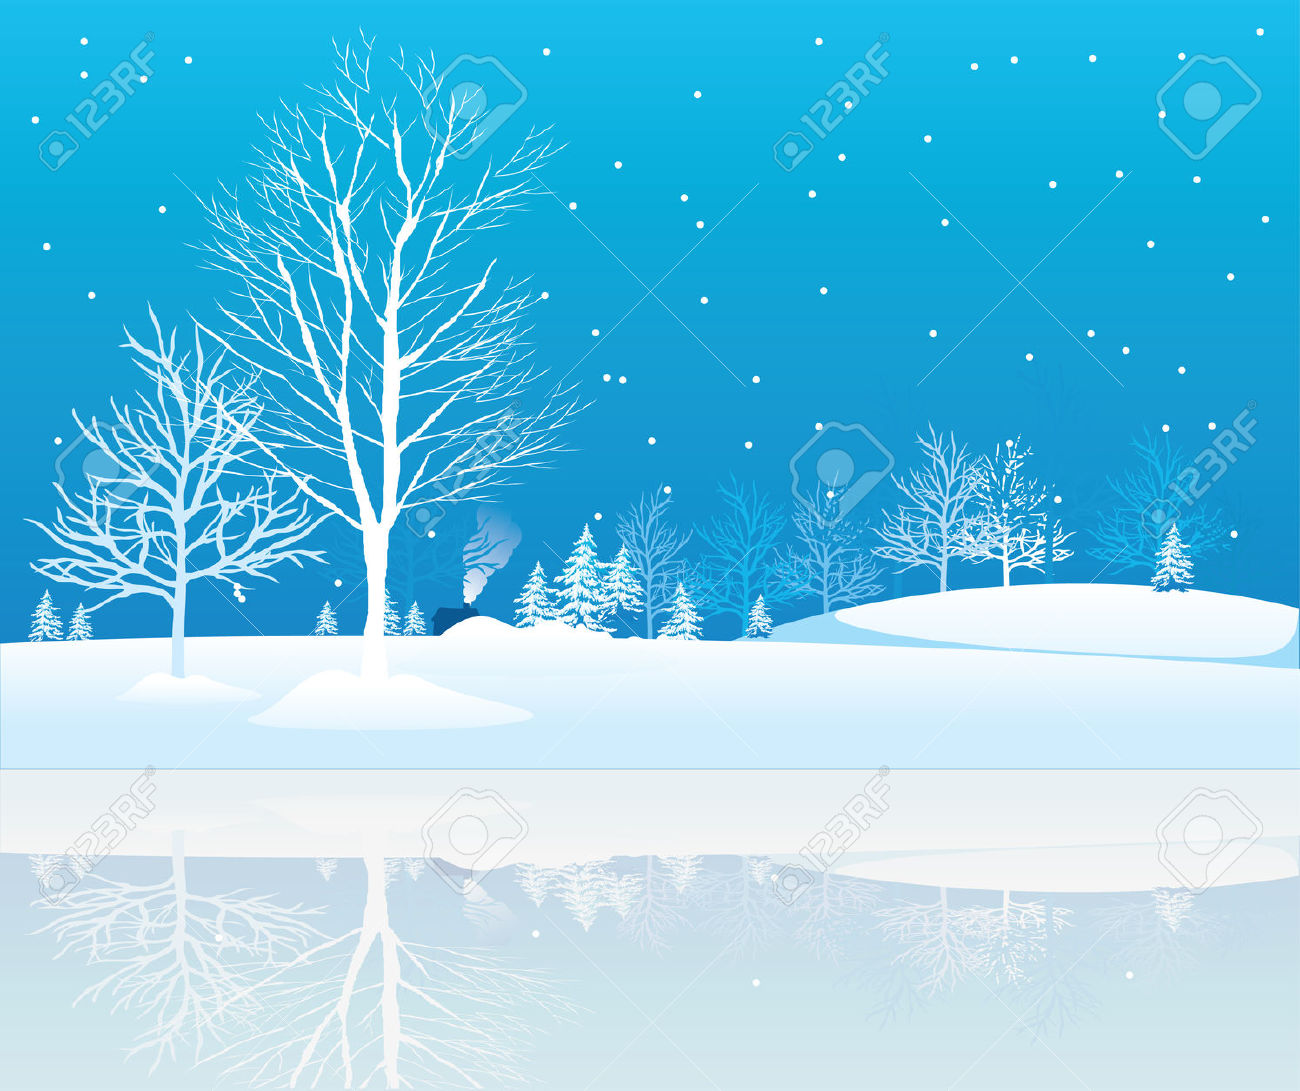 Winter Wonderland » Arthatravel.com